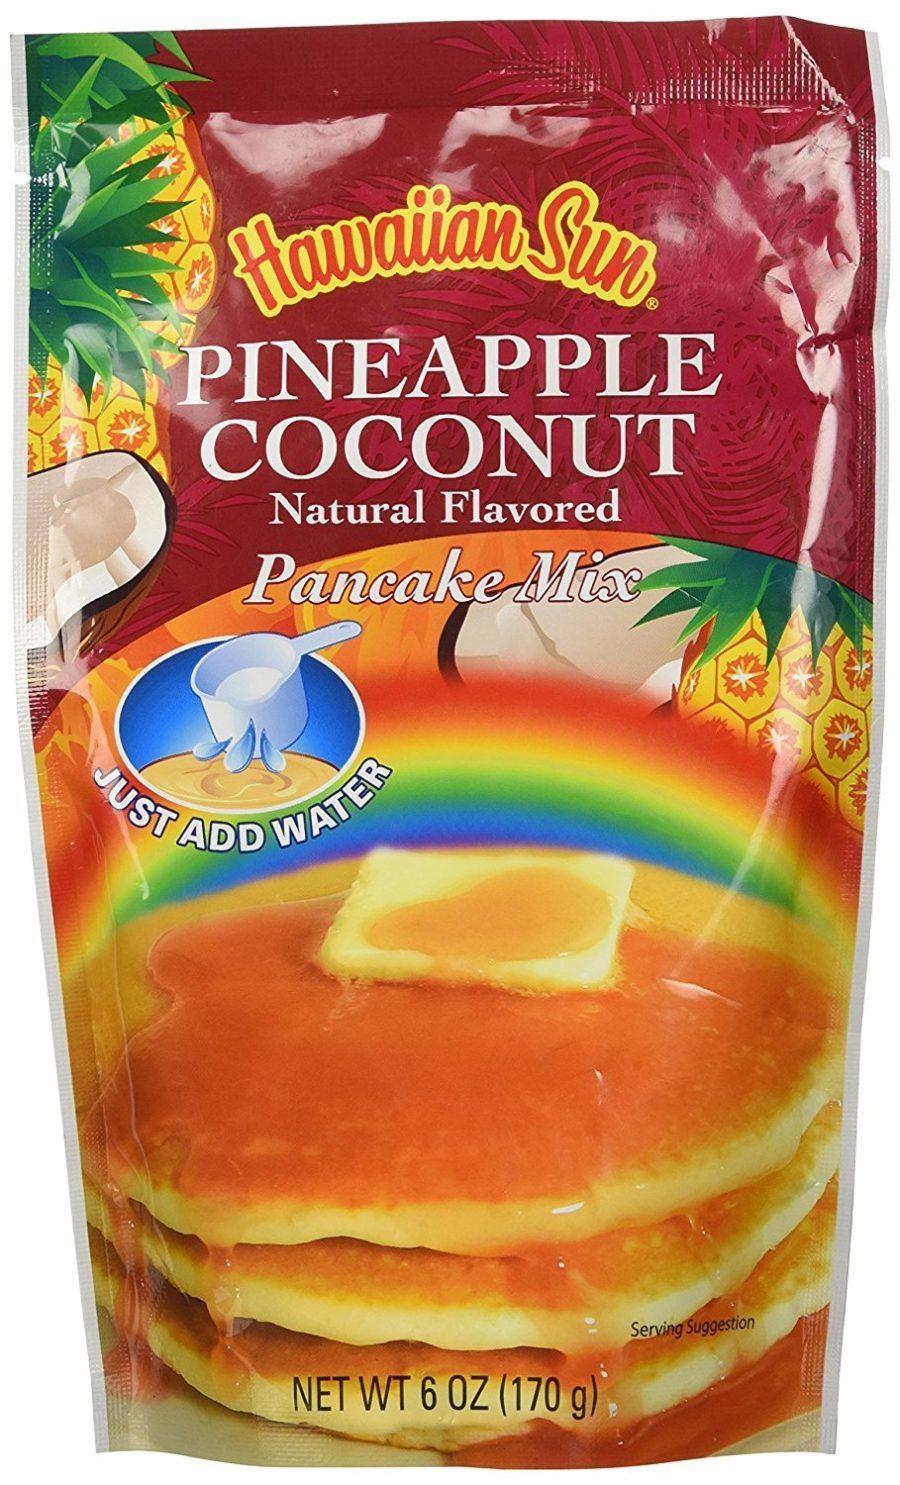 Hawaiian Pineapple Coconut Pancake Mix From Hawaii by Hawaiian Sun